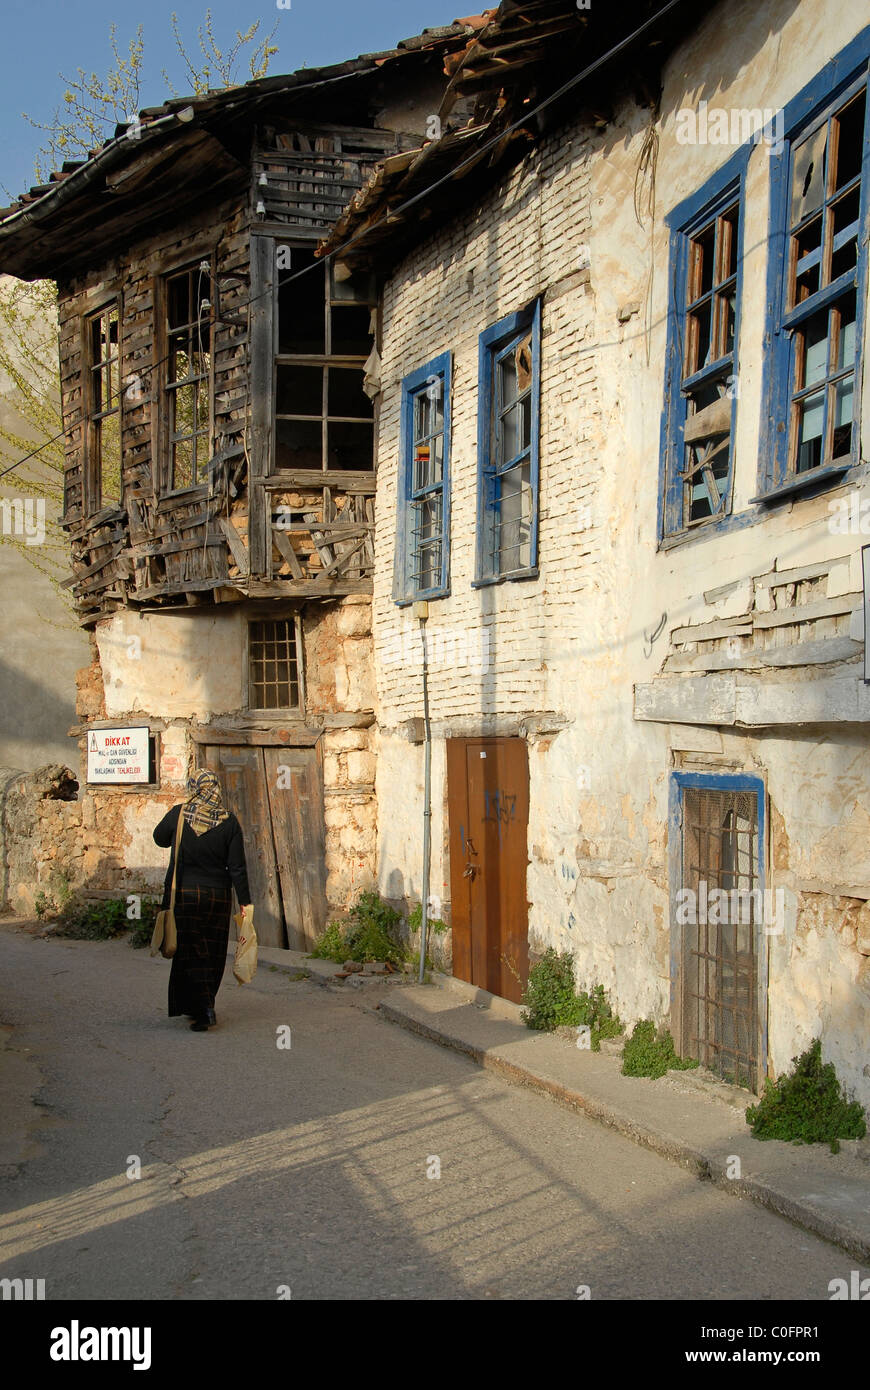 Old houses in Kaleici, Old city, Antalya Turkey Stock Photo